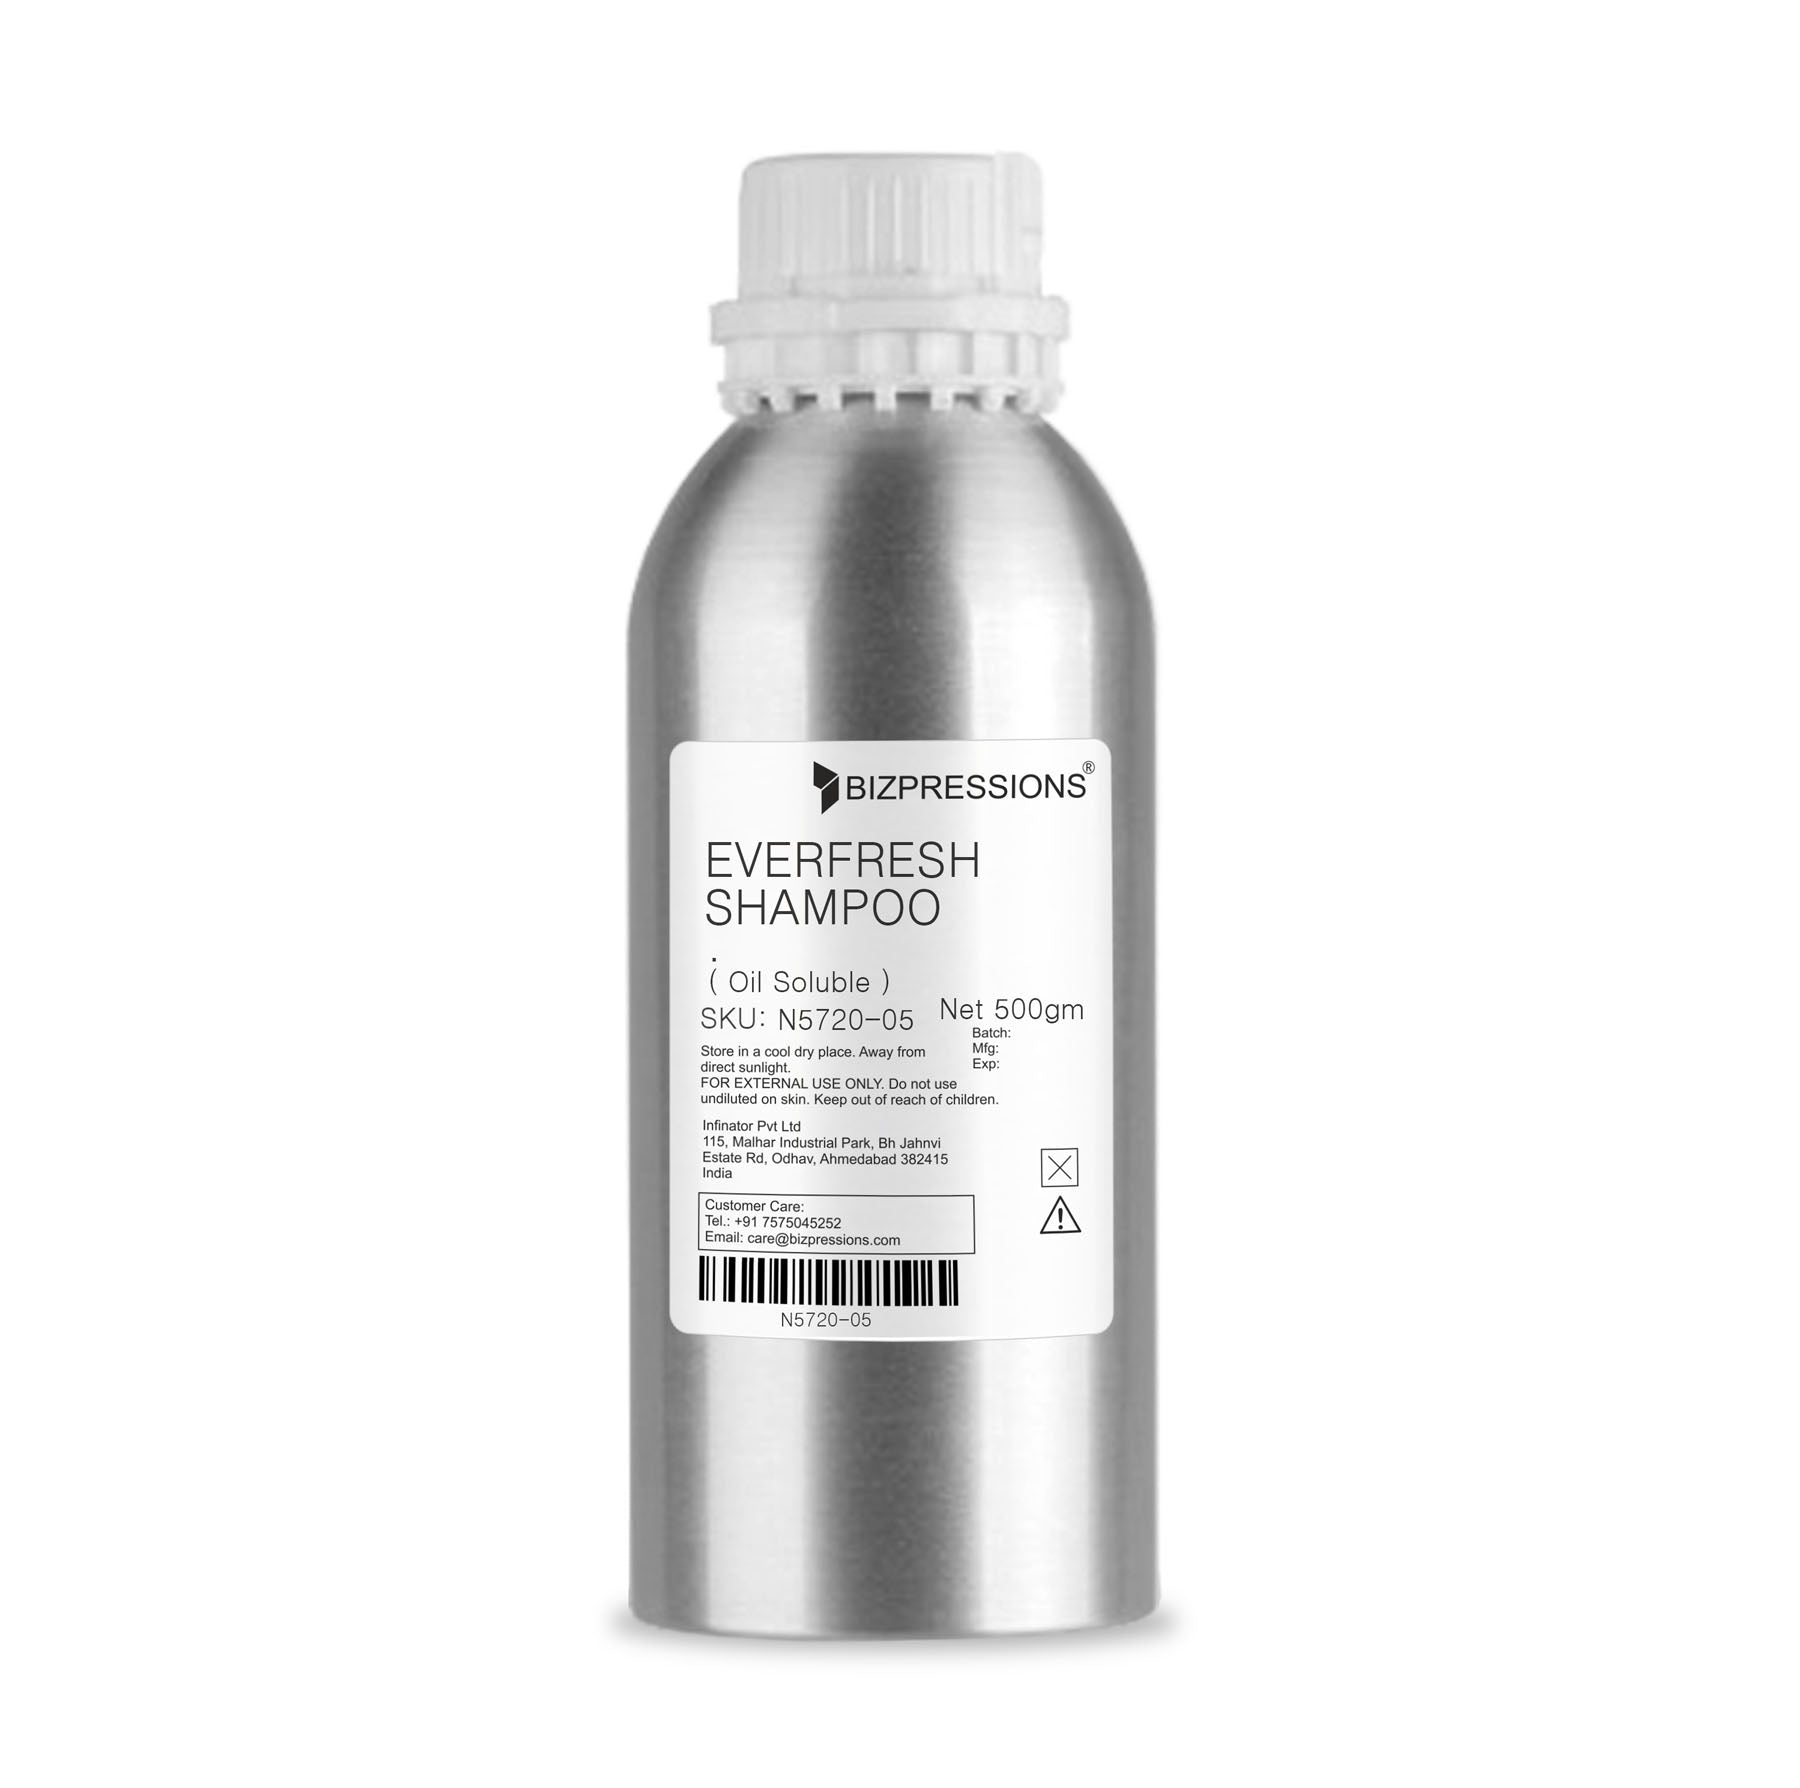 EVERFRESH SHAMPOO - Fragrance ( Oil Soluble ) - 500 gm